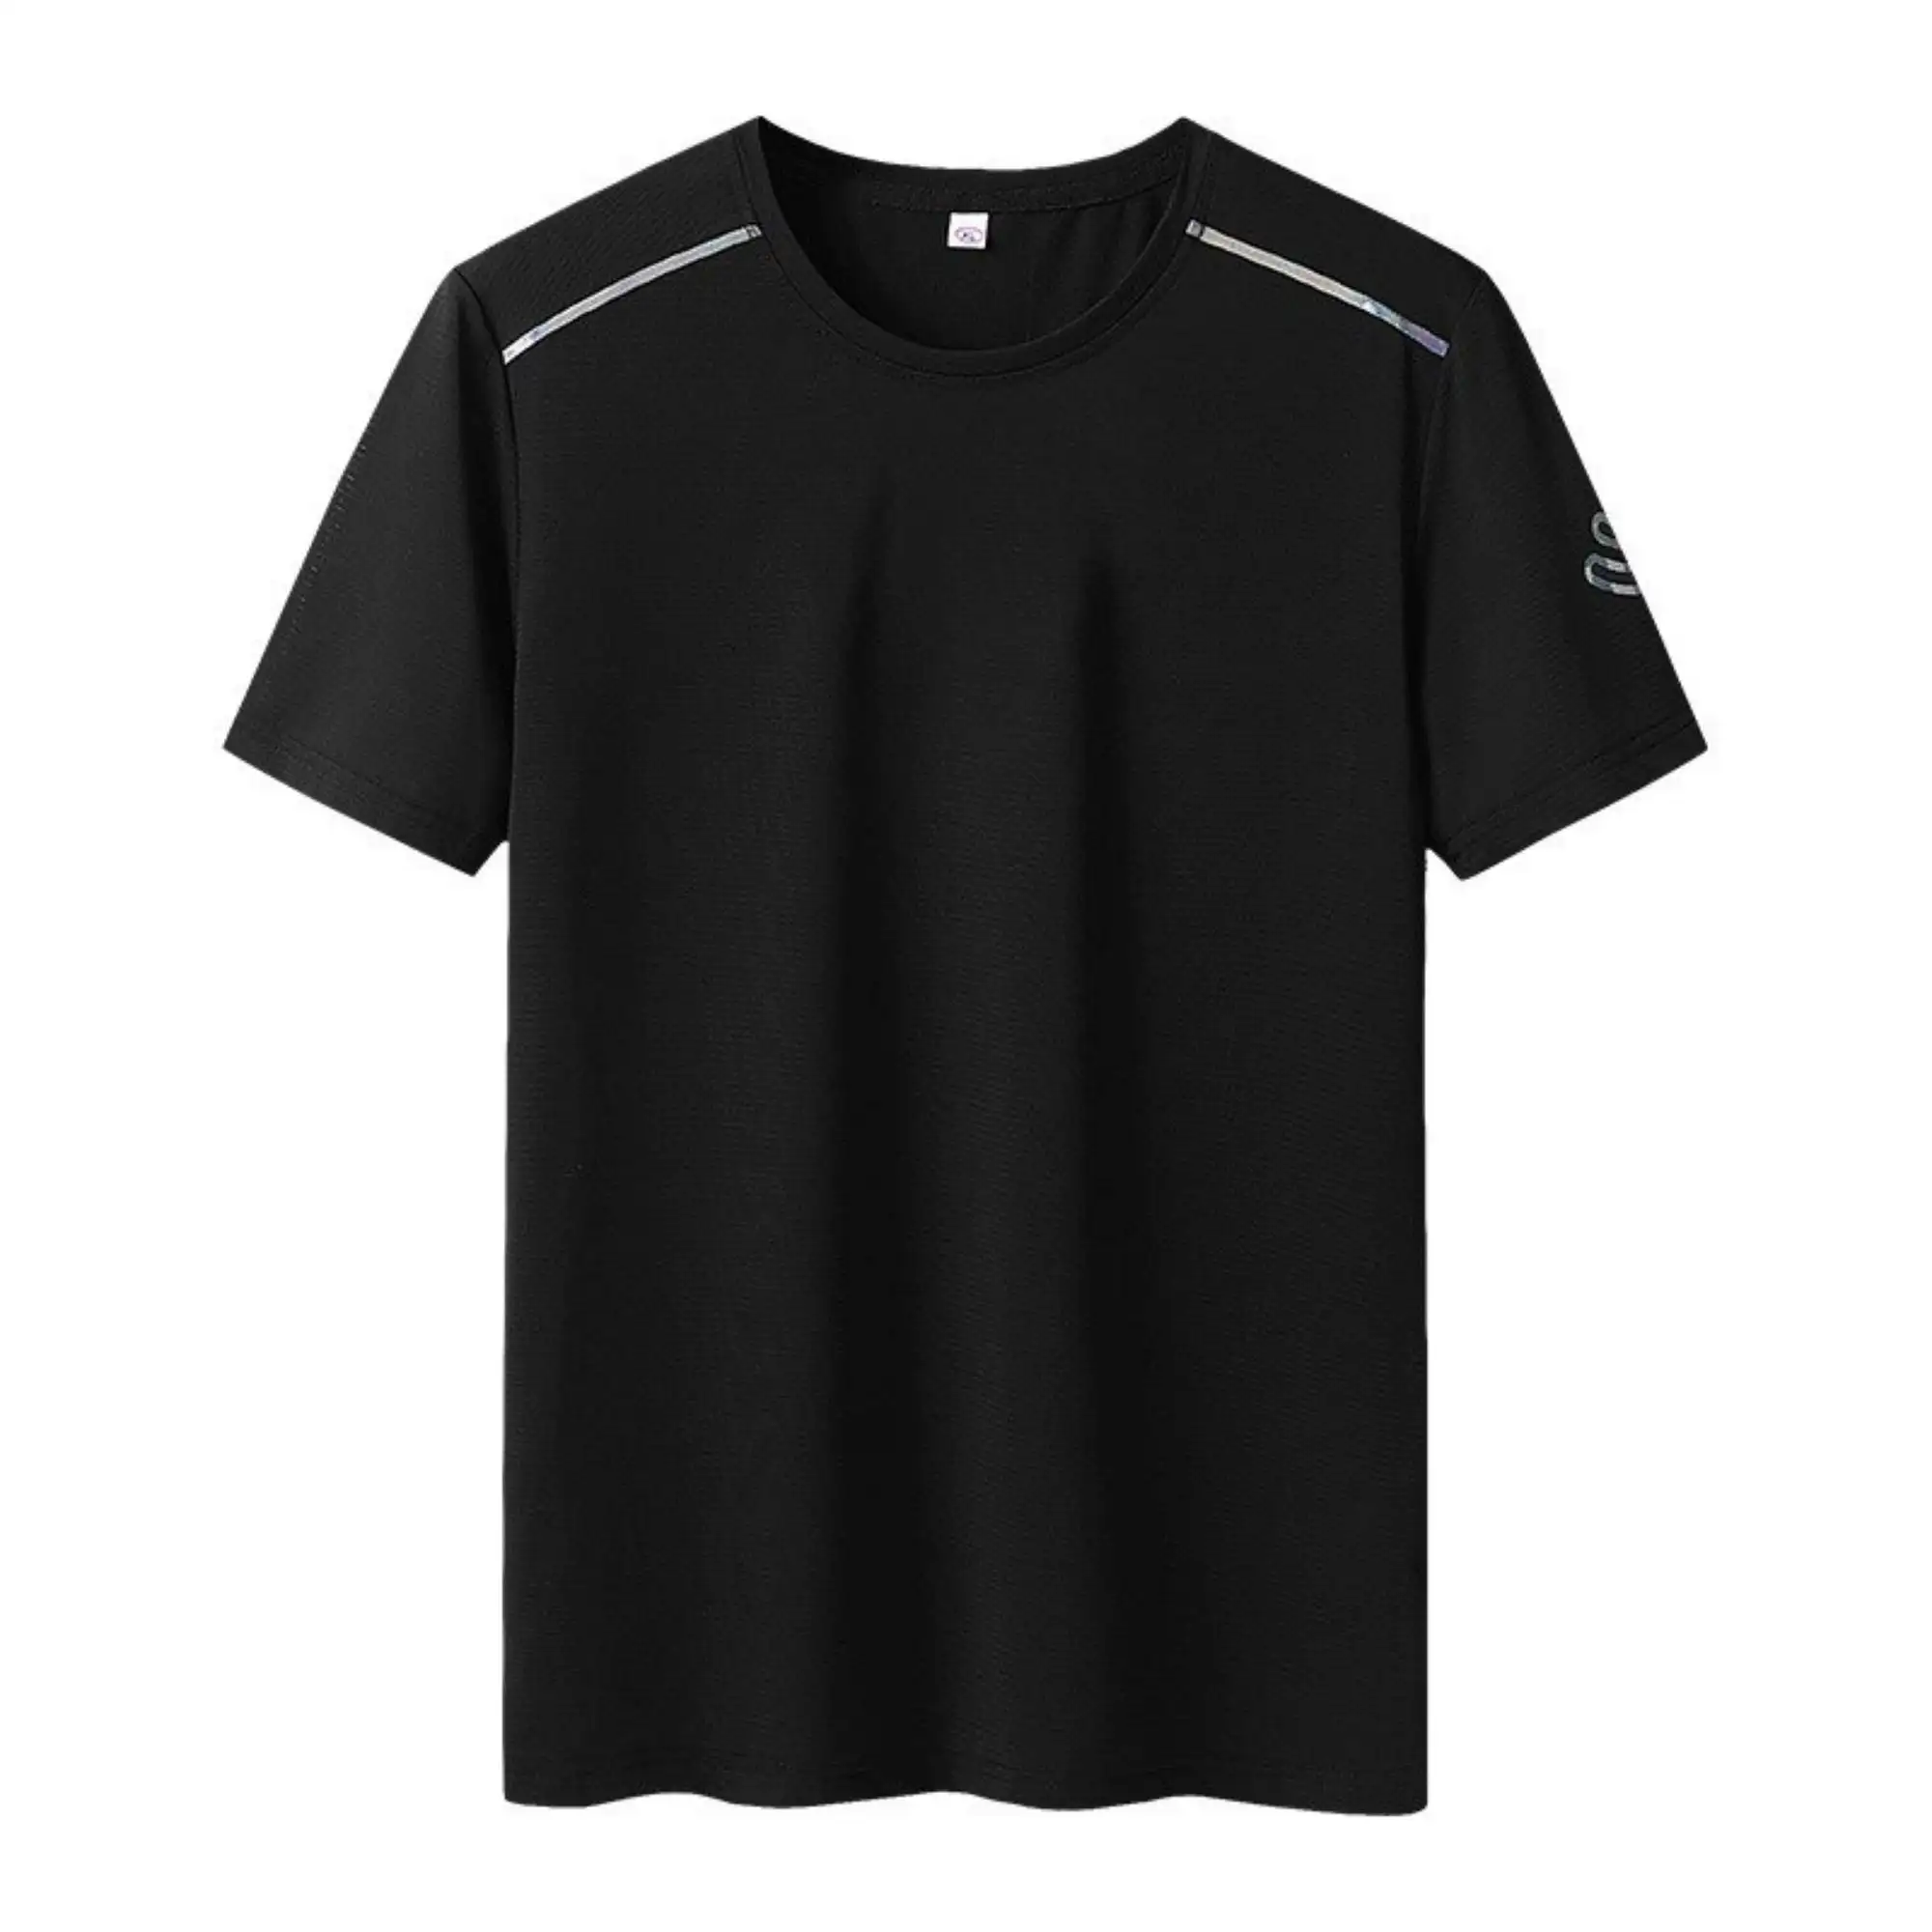 100% Polyester Quick Dry Fitted Seide Sport Super dry Gym Wear Fitness Laufen Athletic Summer Großhandel Plain Black Herren T-Shirt